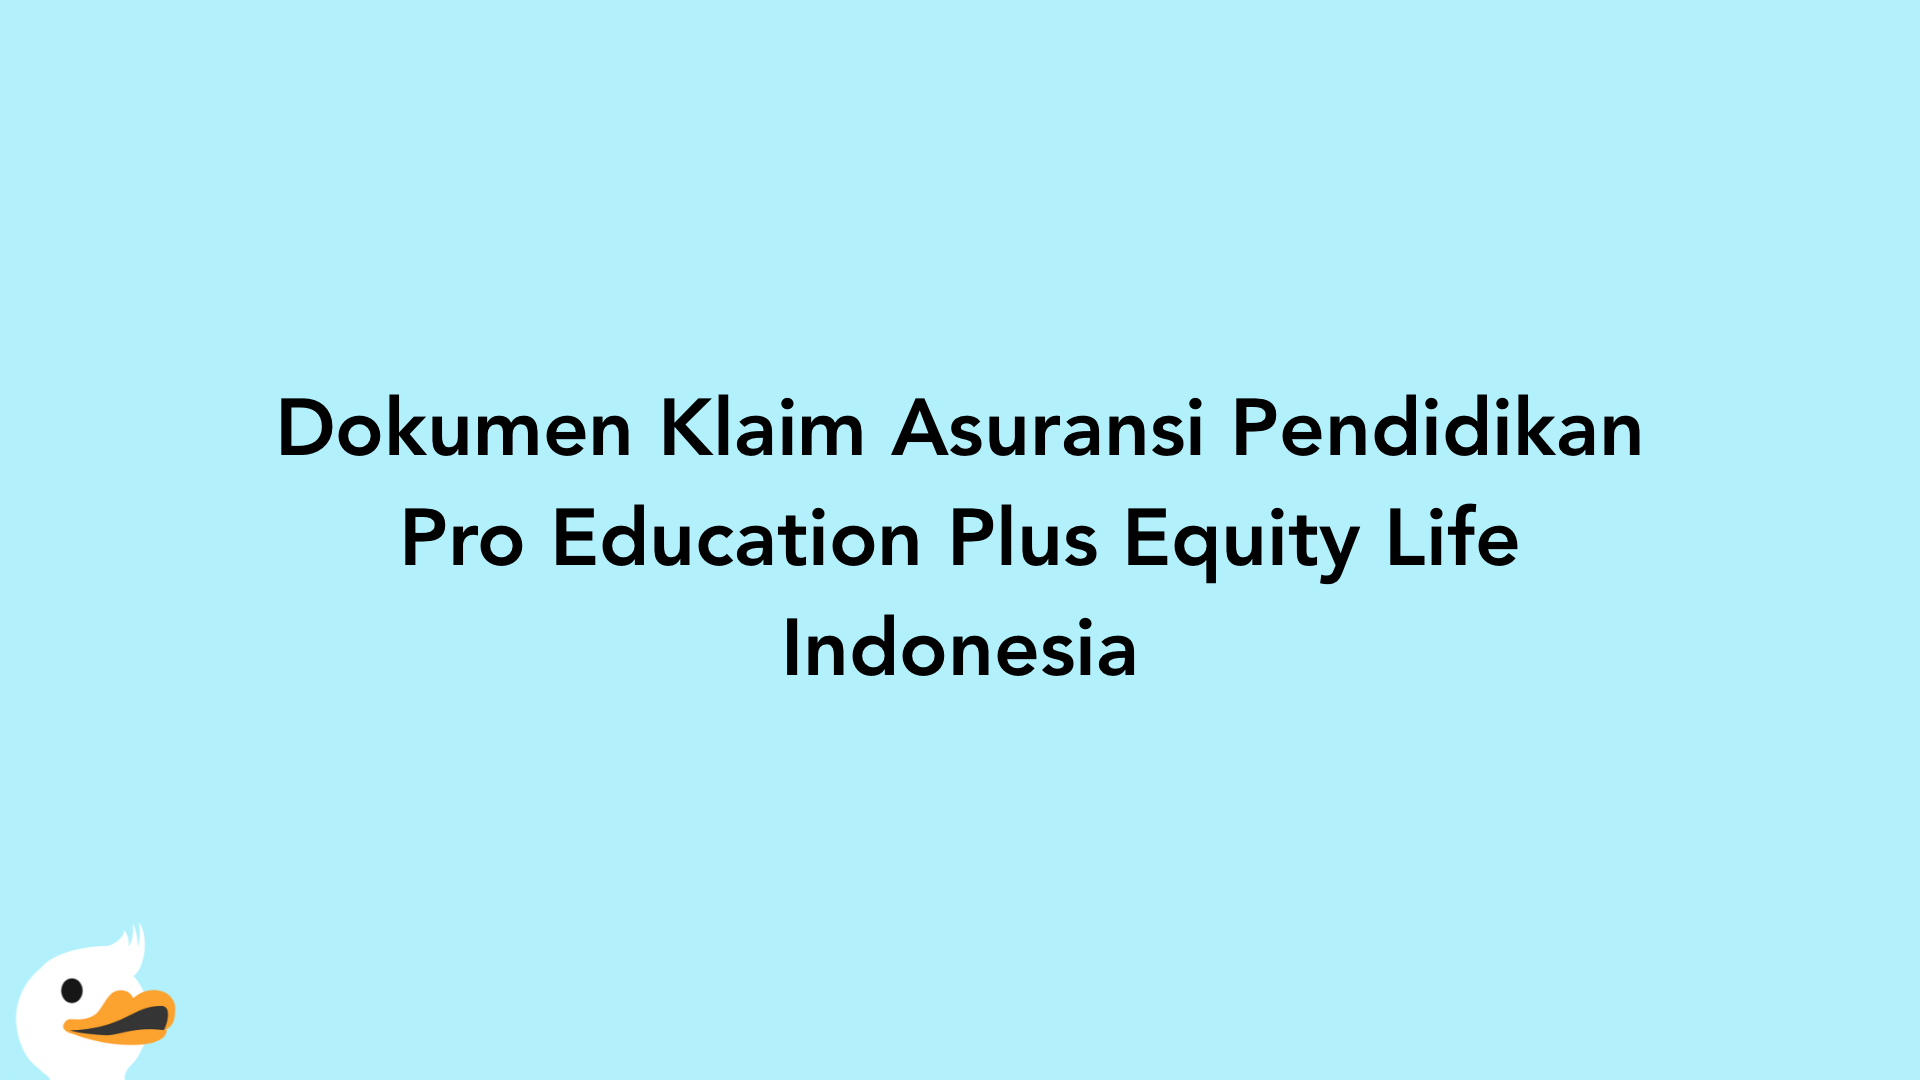 Dokumen Klaim Asuransi Pendidikan Pro Education Plus Equity Life Indonesia